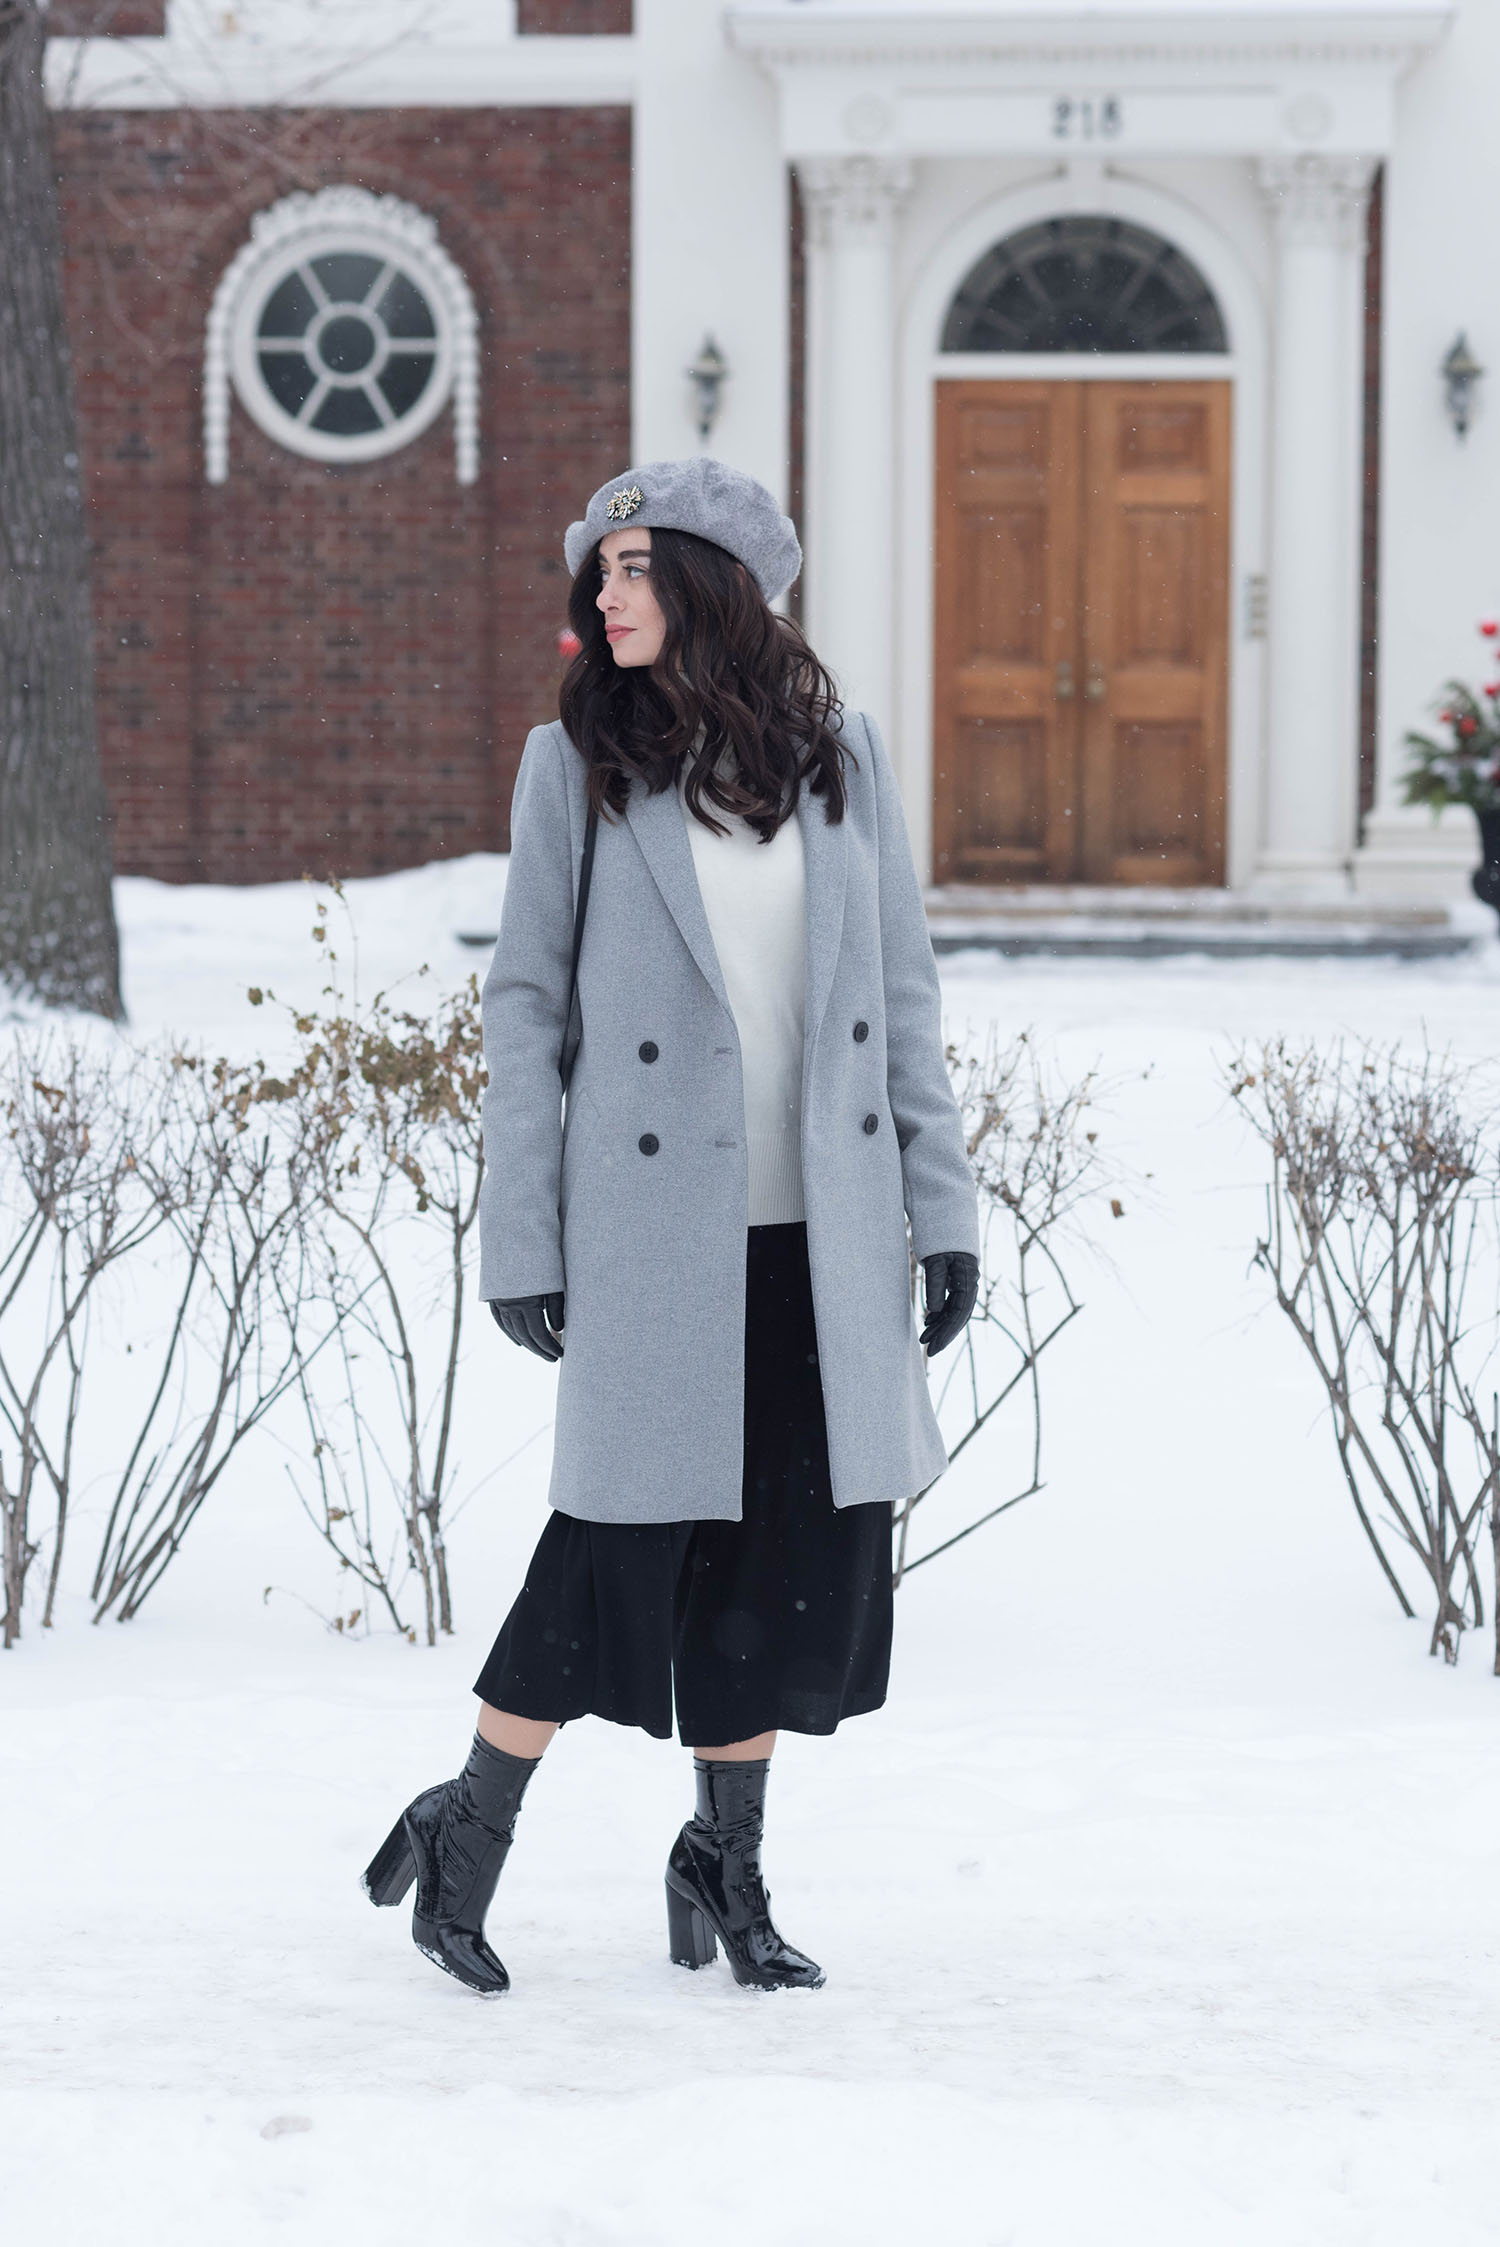 Fashion blogger Cee Fardoe of Coco & Vera walks down Roslyn Road in Winnipeg on a snowy day, wearing a grey Zara coat and Raye patent boots